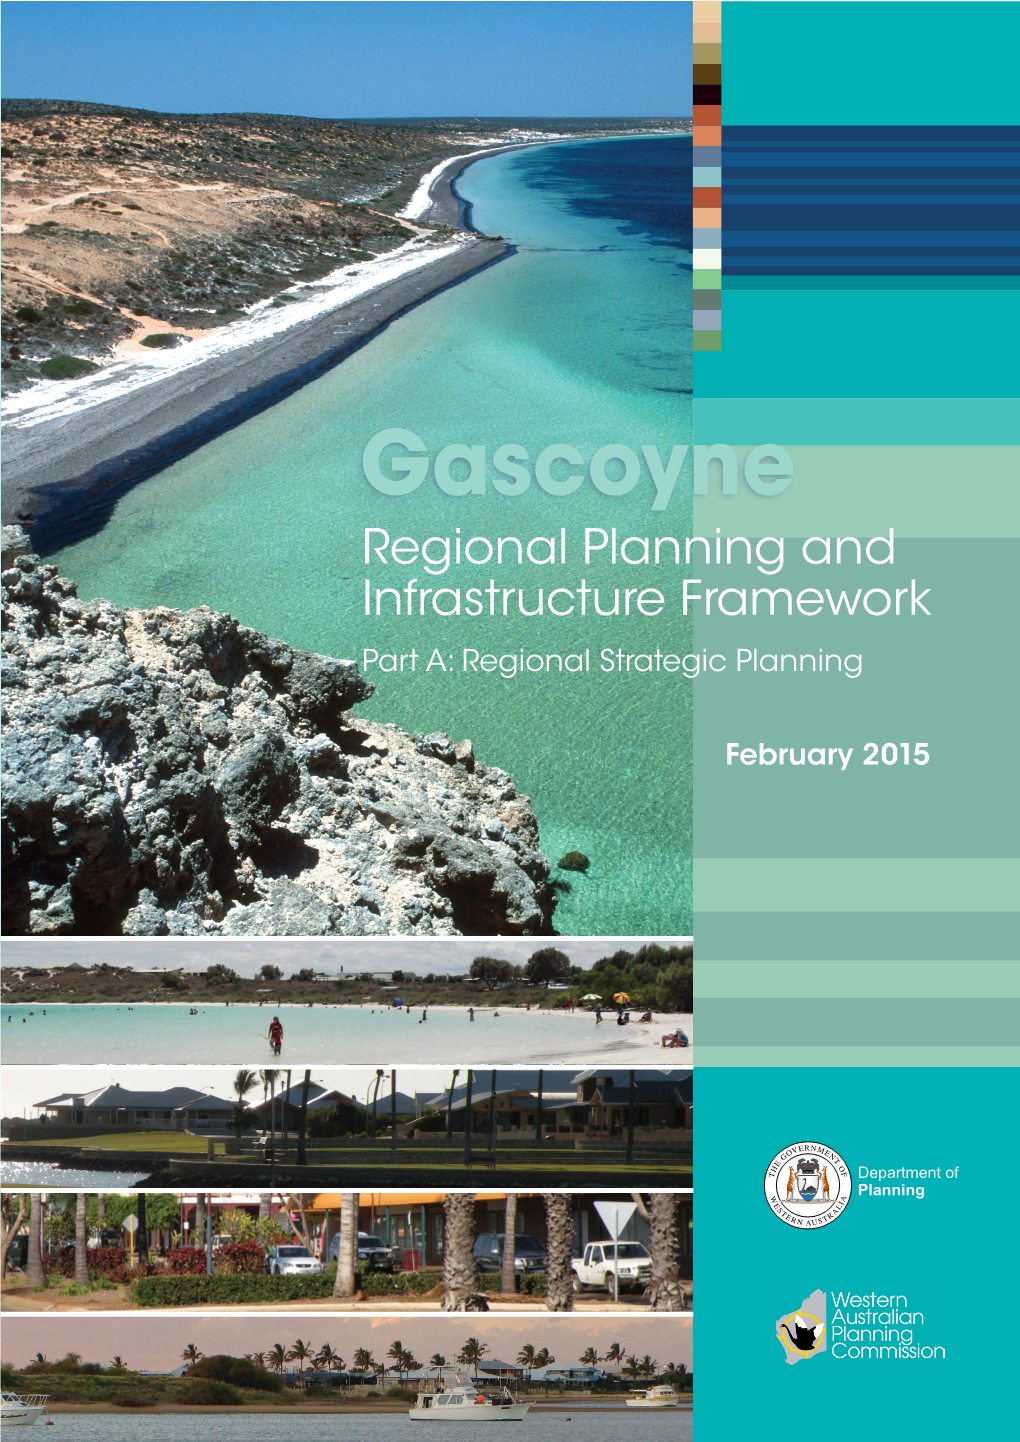 Gascoyne Regional Planning and Infrastructure Framework Part A: Regional Strategic Planning